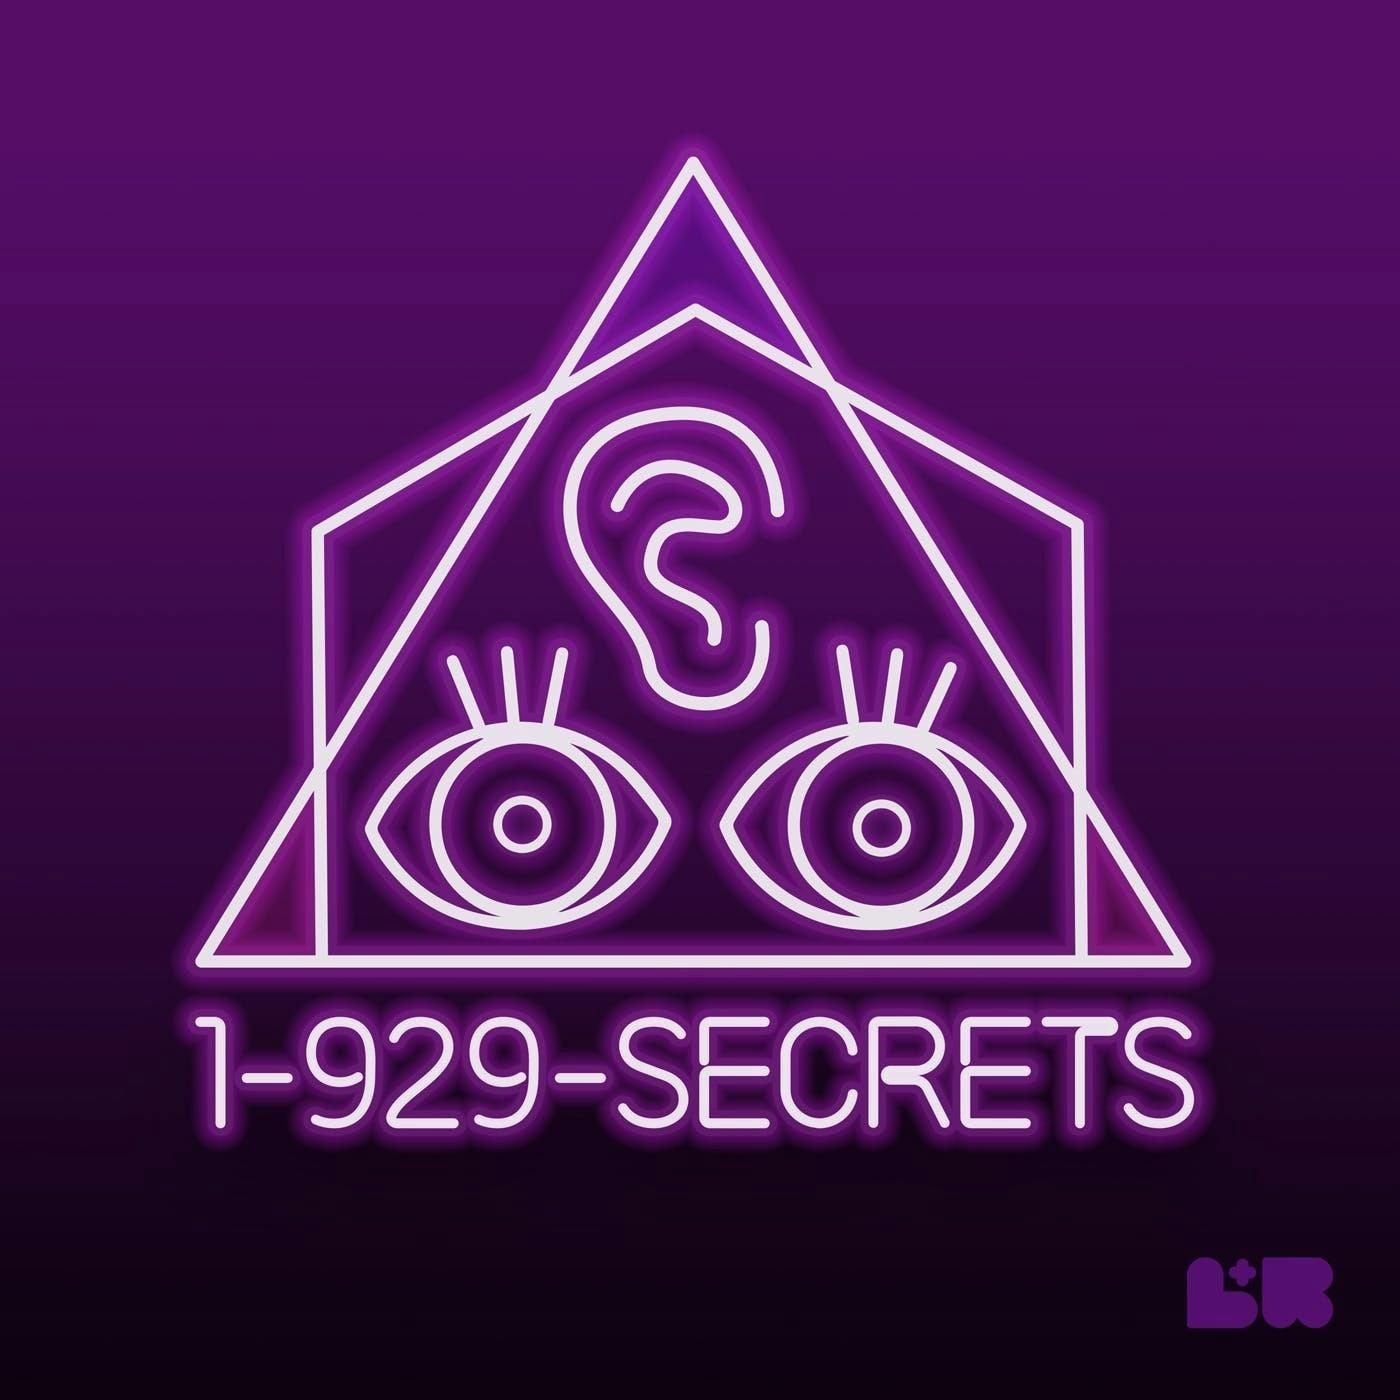 The Secrets Hotline podcast show image